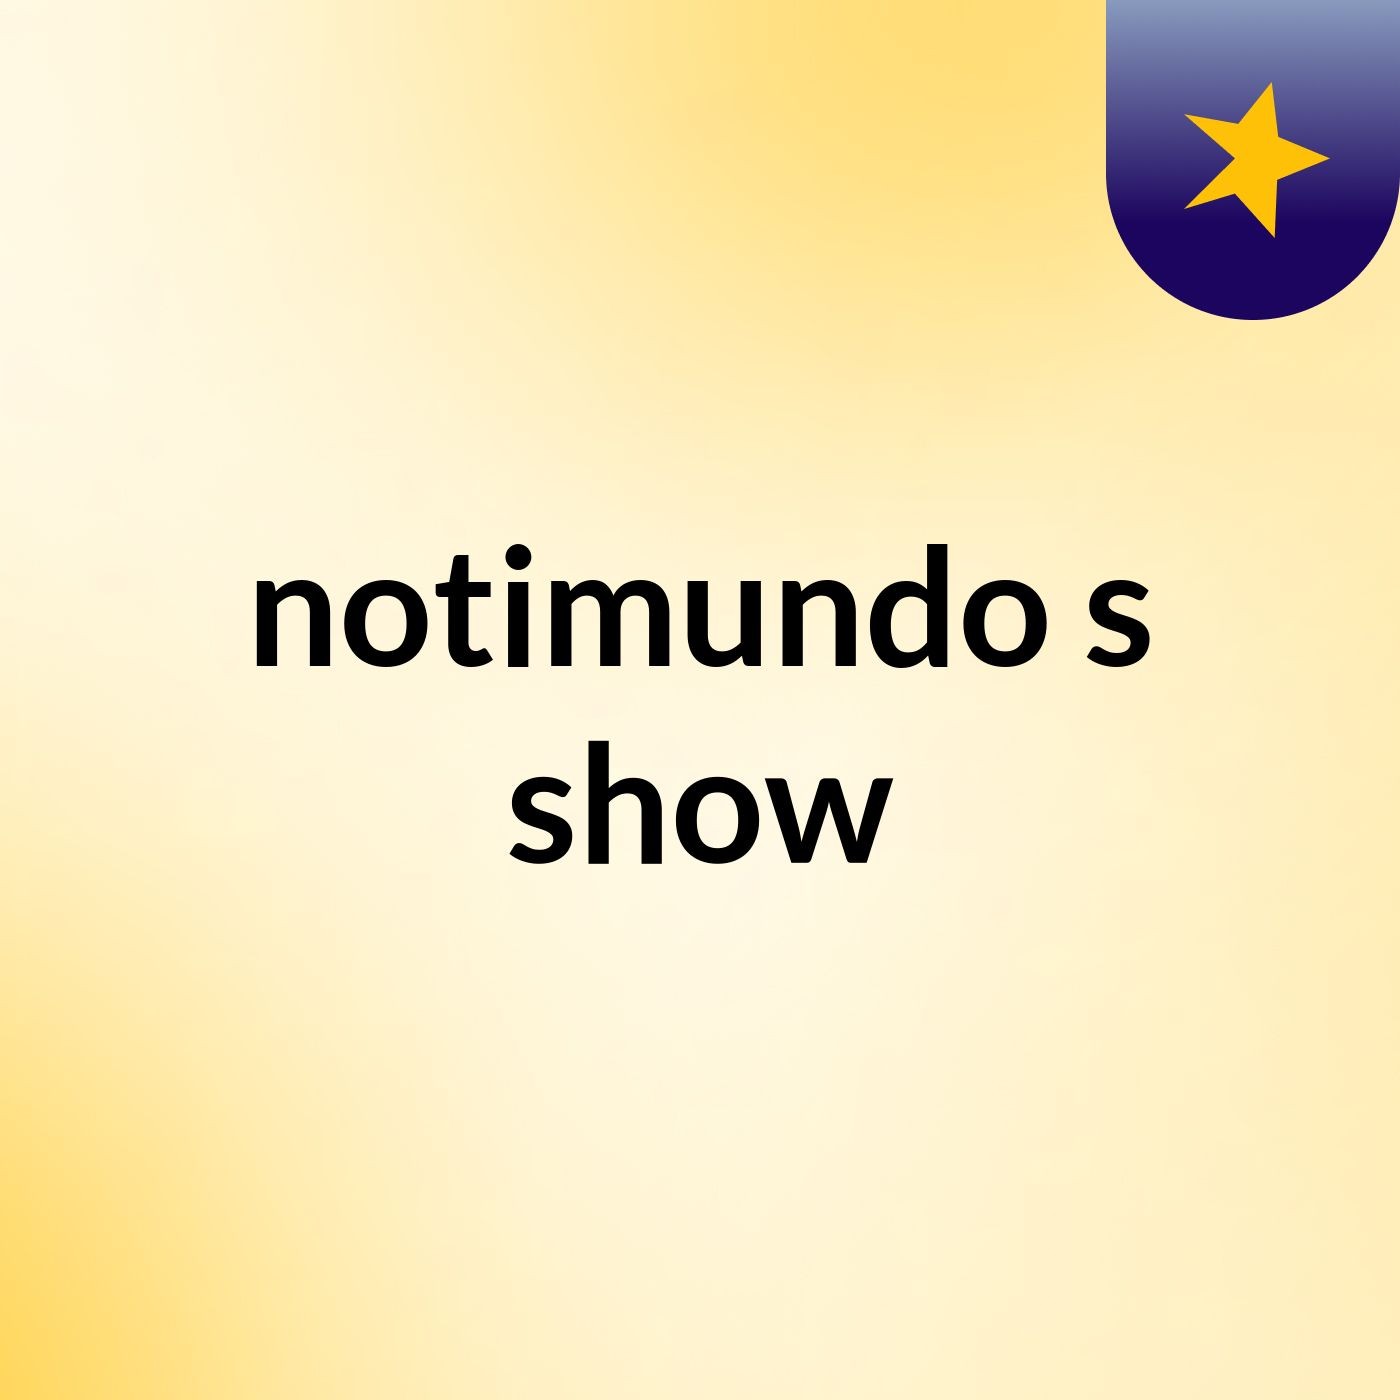 notimundo's show